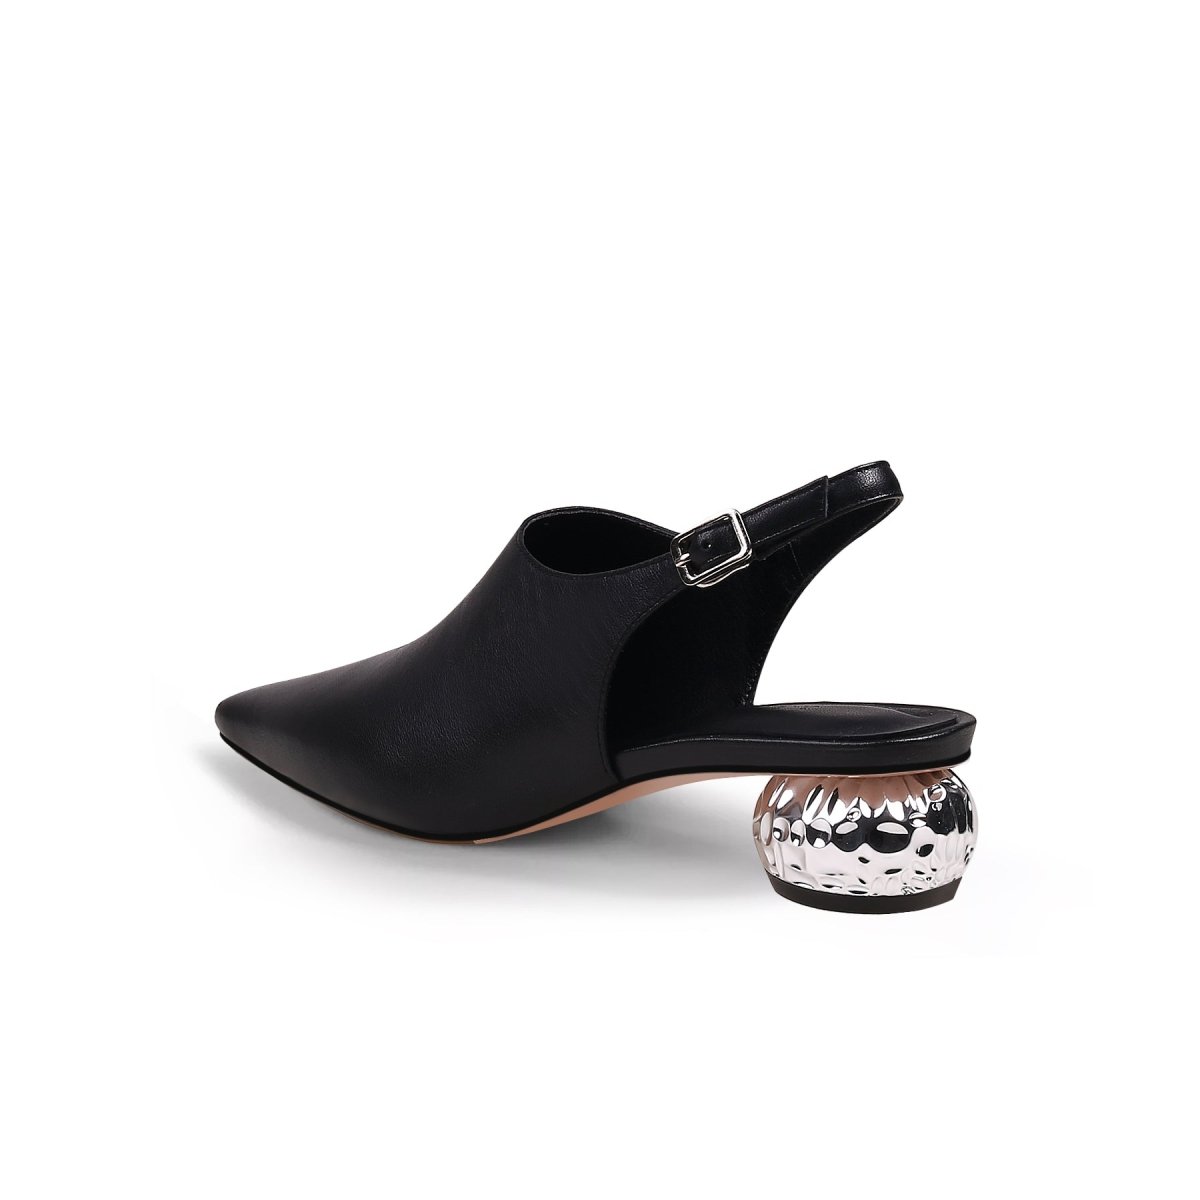 Fashion Queen Black Sandals - 0cm